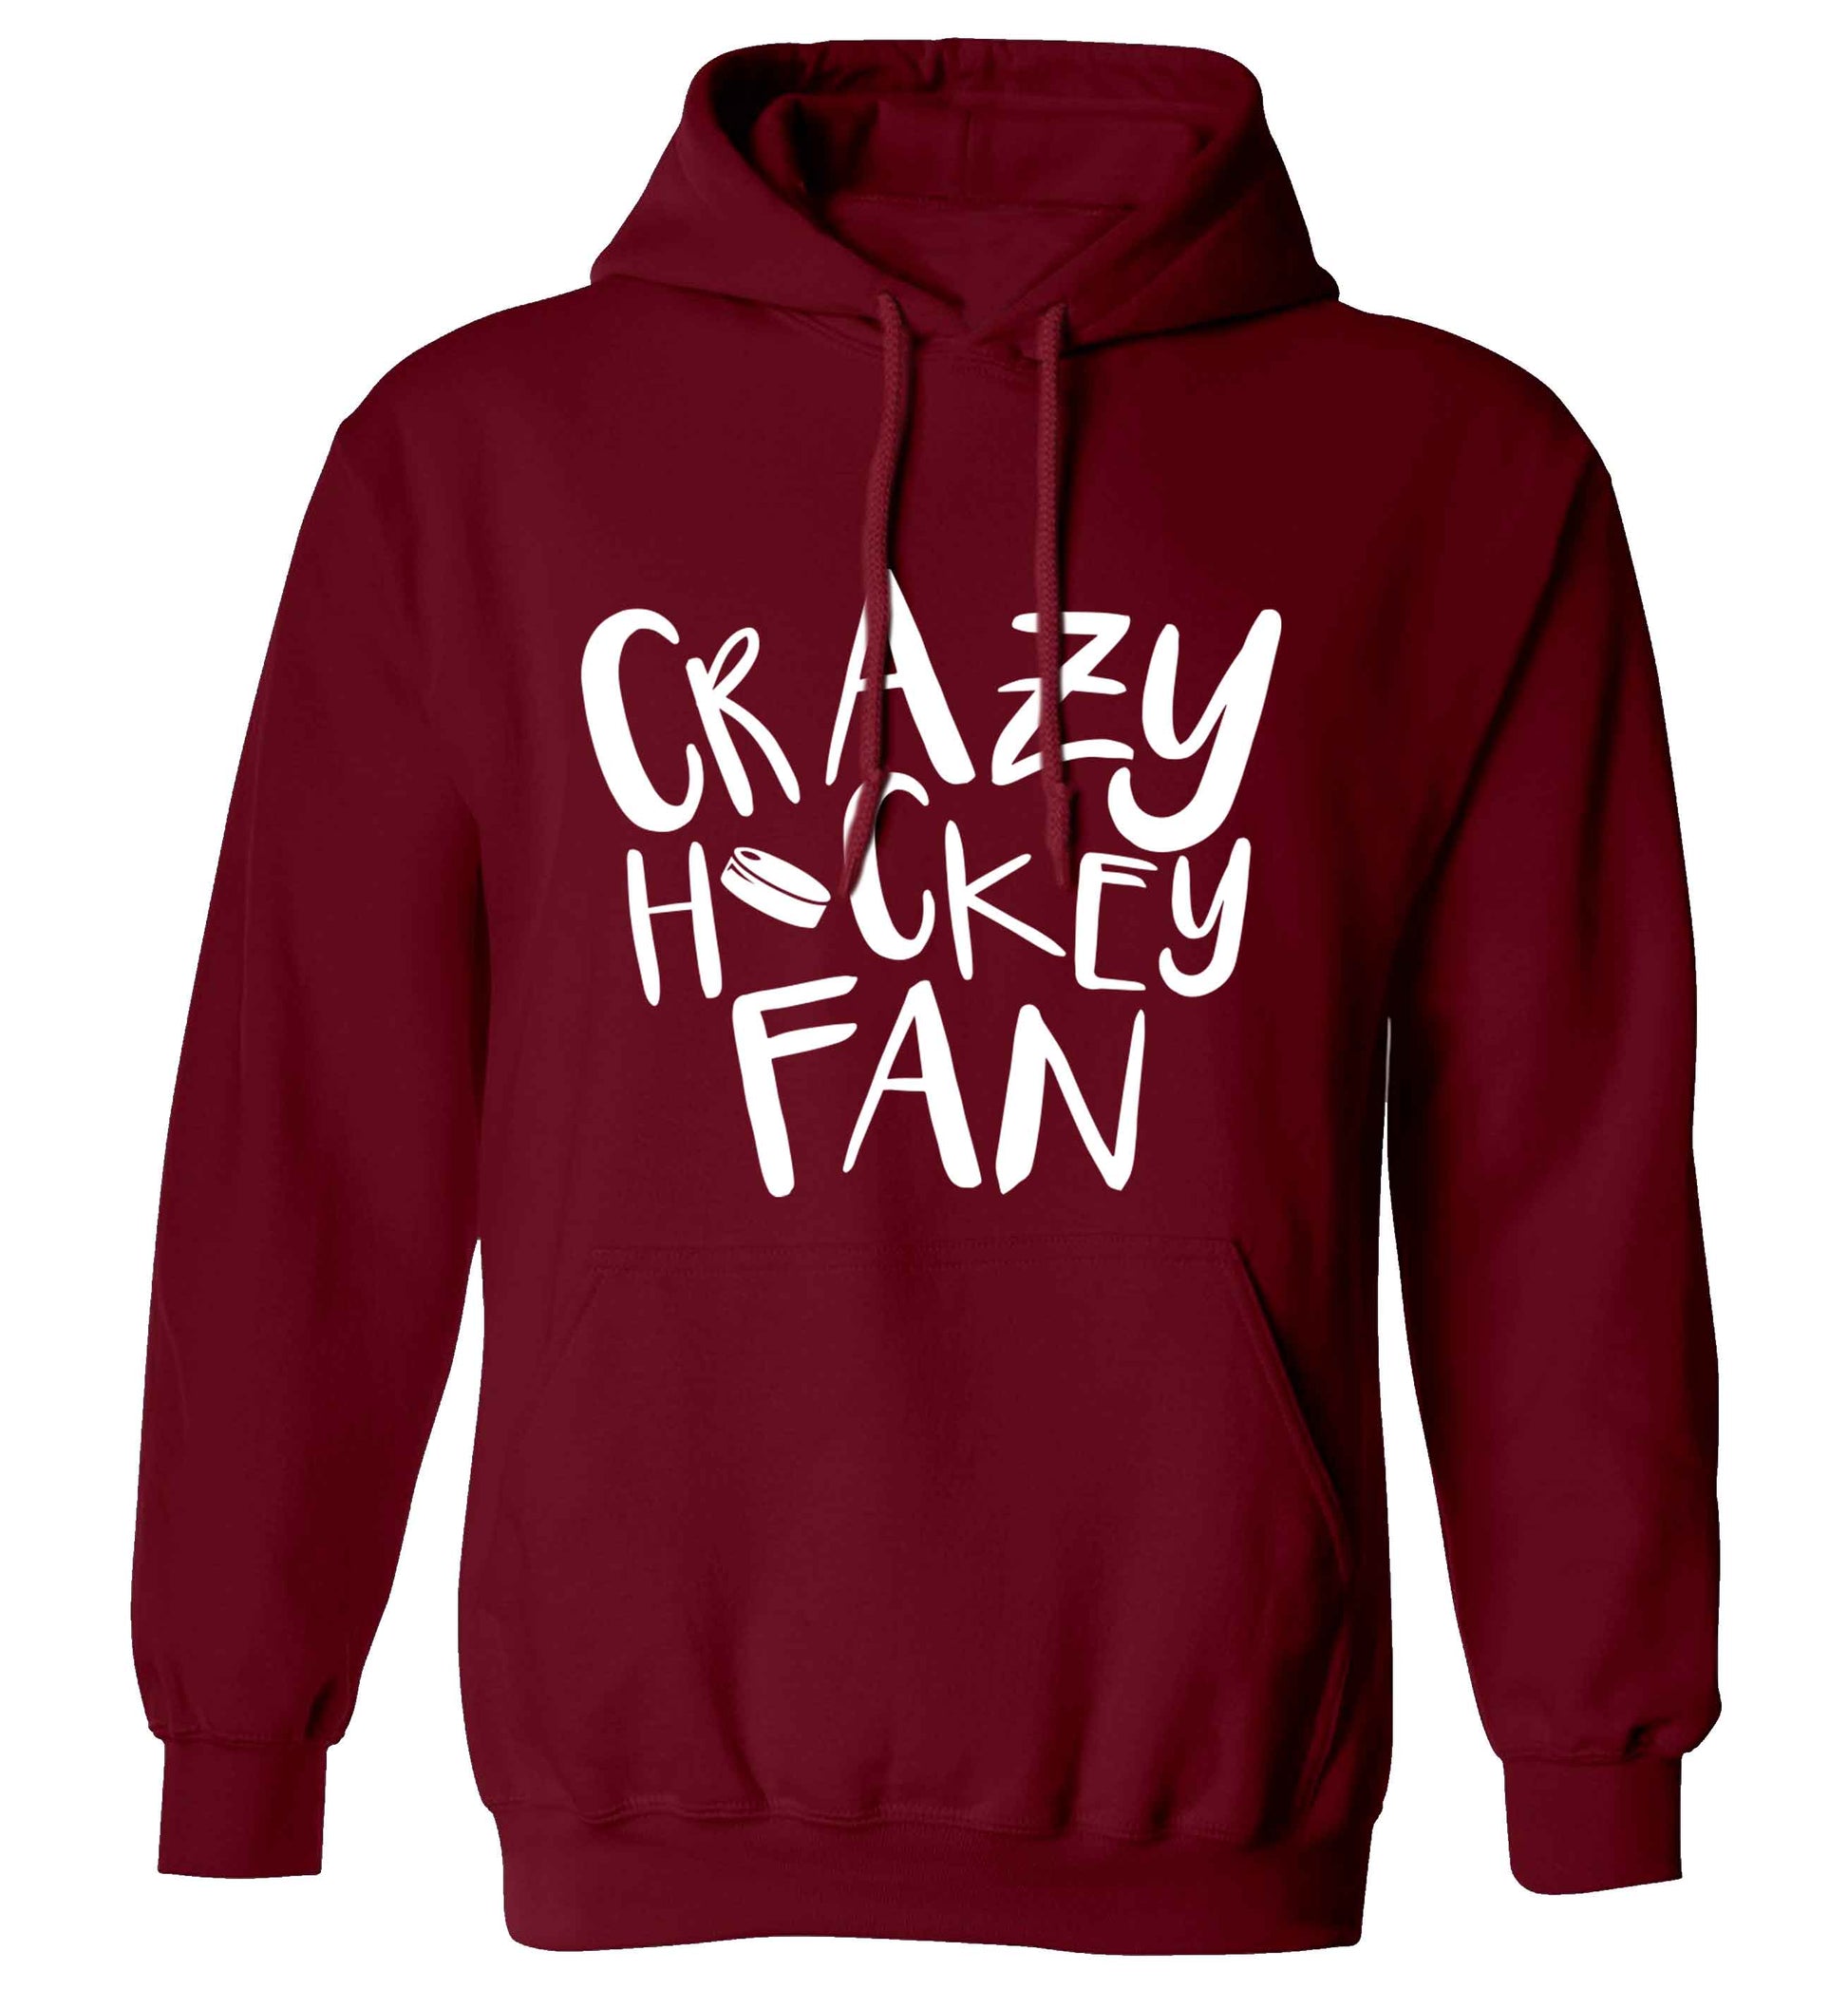 Crazy hockey fan adults unisex maroon hoodie 2XL